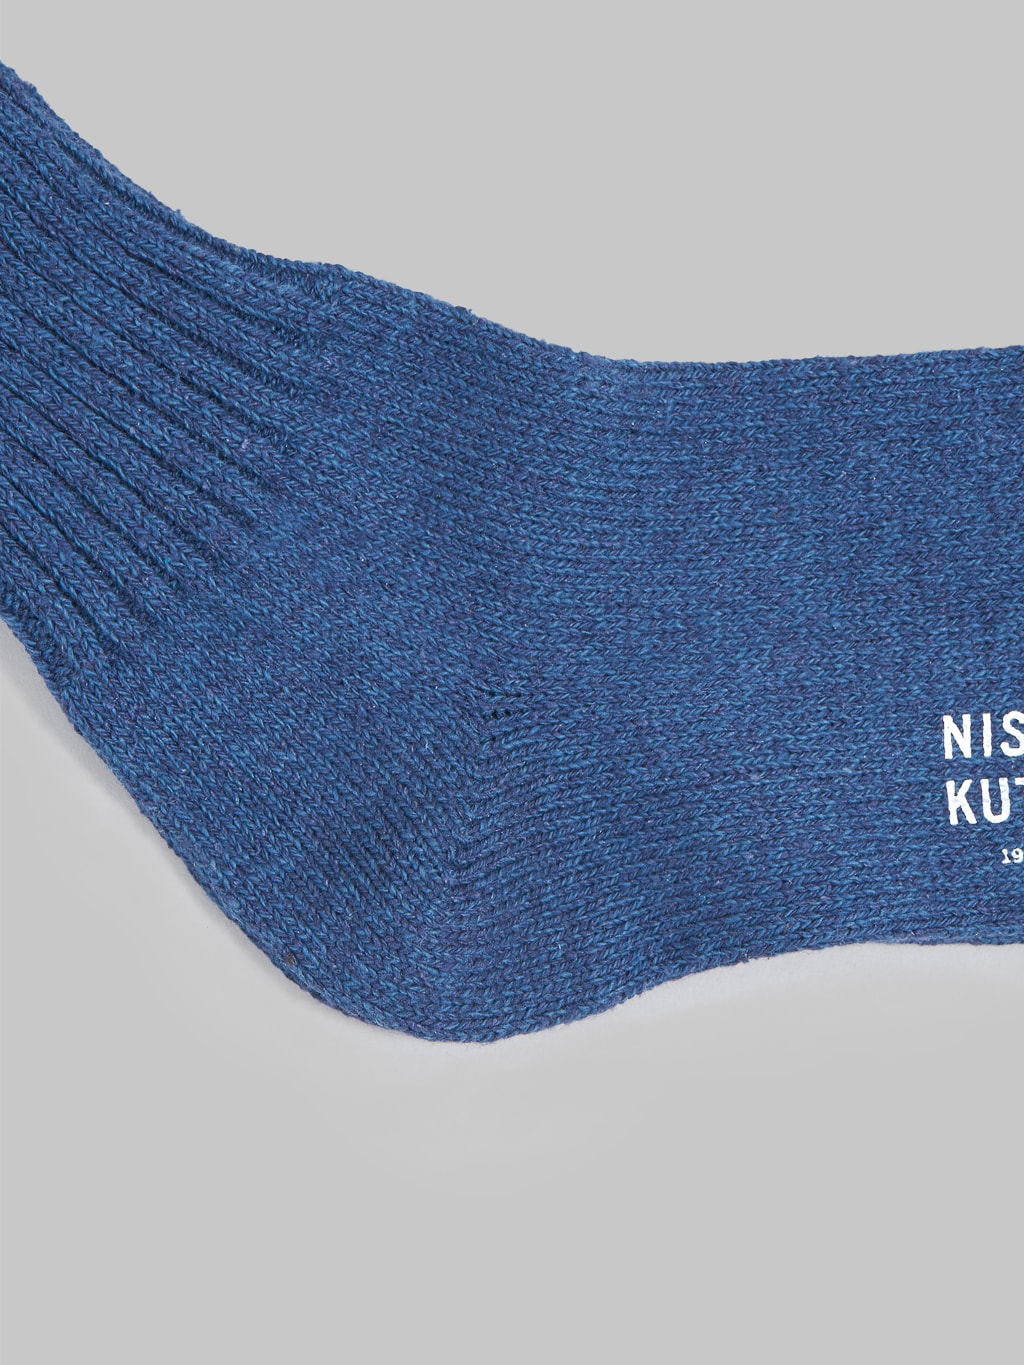 Nishiguchi Kutsushita Silk Cotton Socks Navy Texture